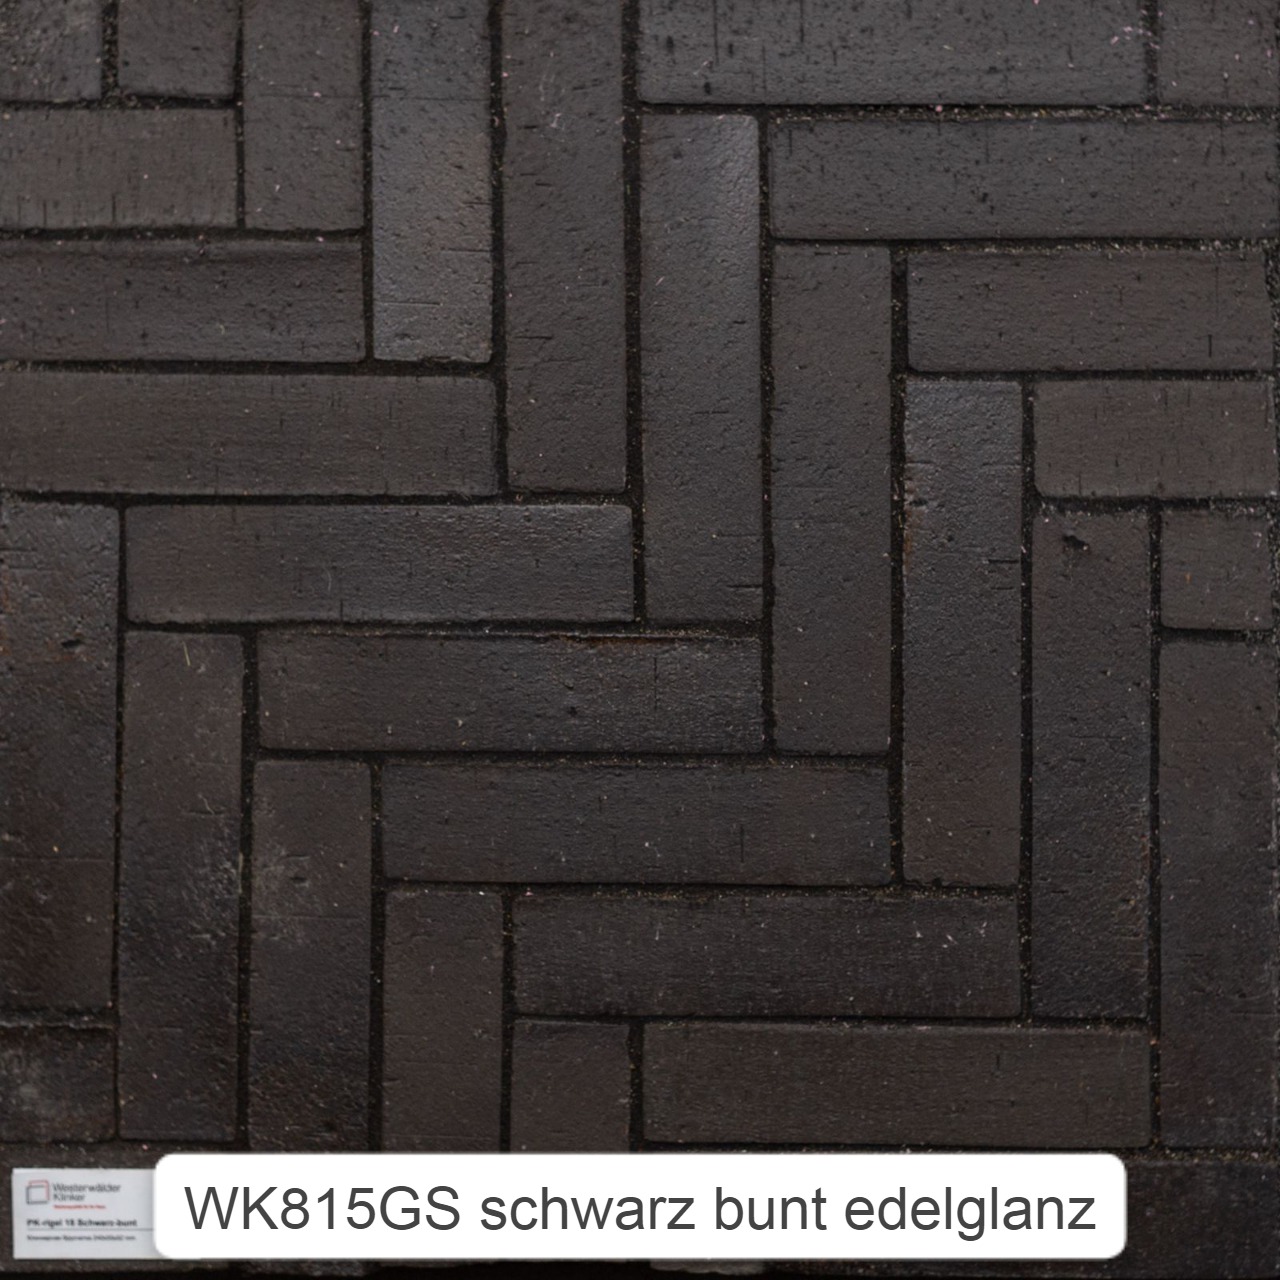 WK815GS Schwarz bunt edelglanz riegel без фаски дорожный клинкер, WK815GS Schwarz bunt edelglanz riegel без фаски дорожный клинкер